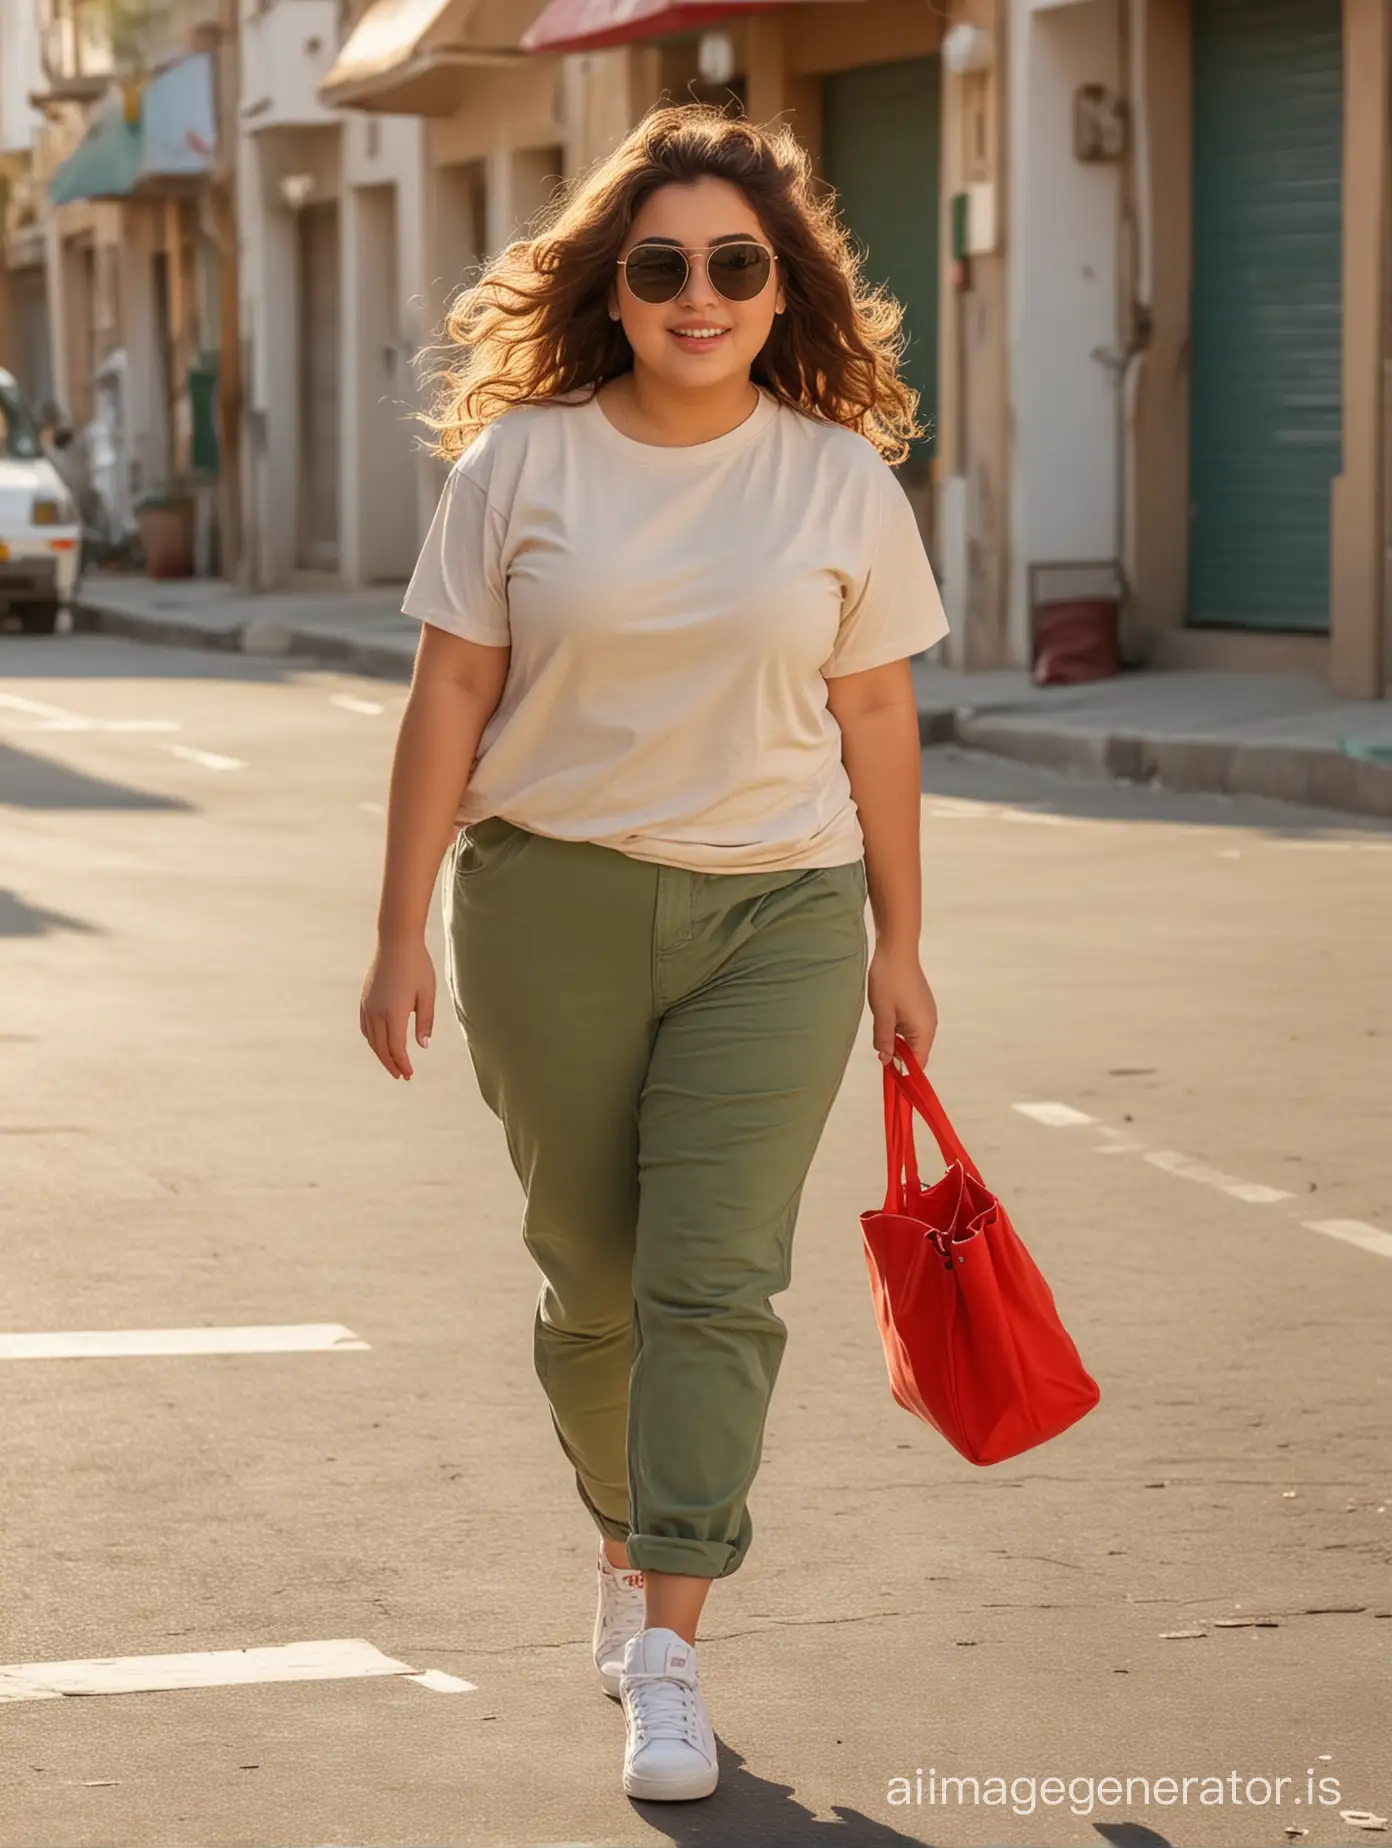 iranian fat girl teenager, wearing beige T-shirt, green baggy pnats, brown wavy hair, red sneakers, red sun glasses, red little bag, walking in street , full body shot, morning light